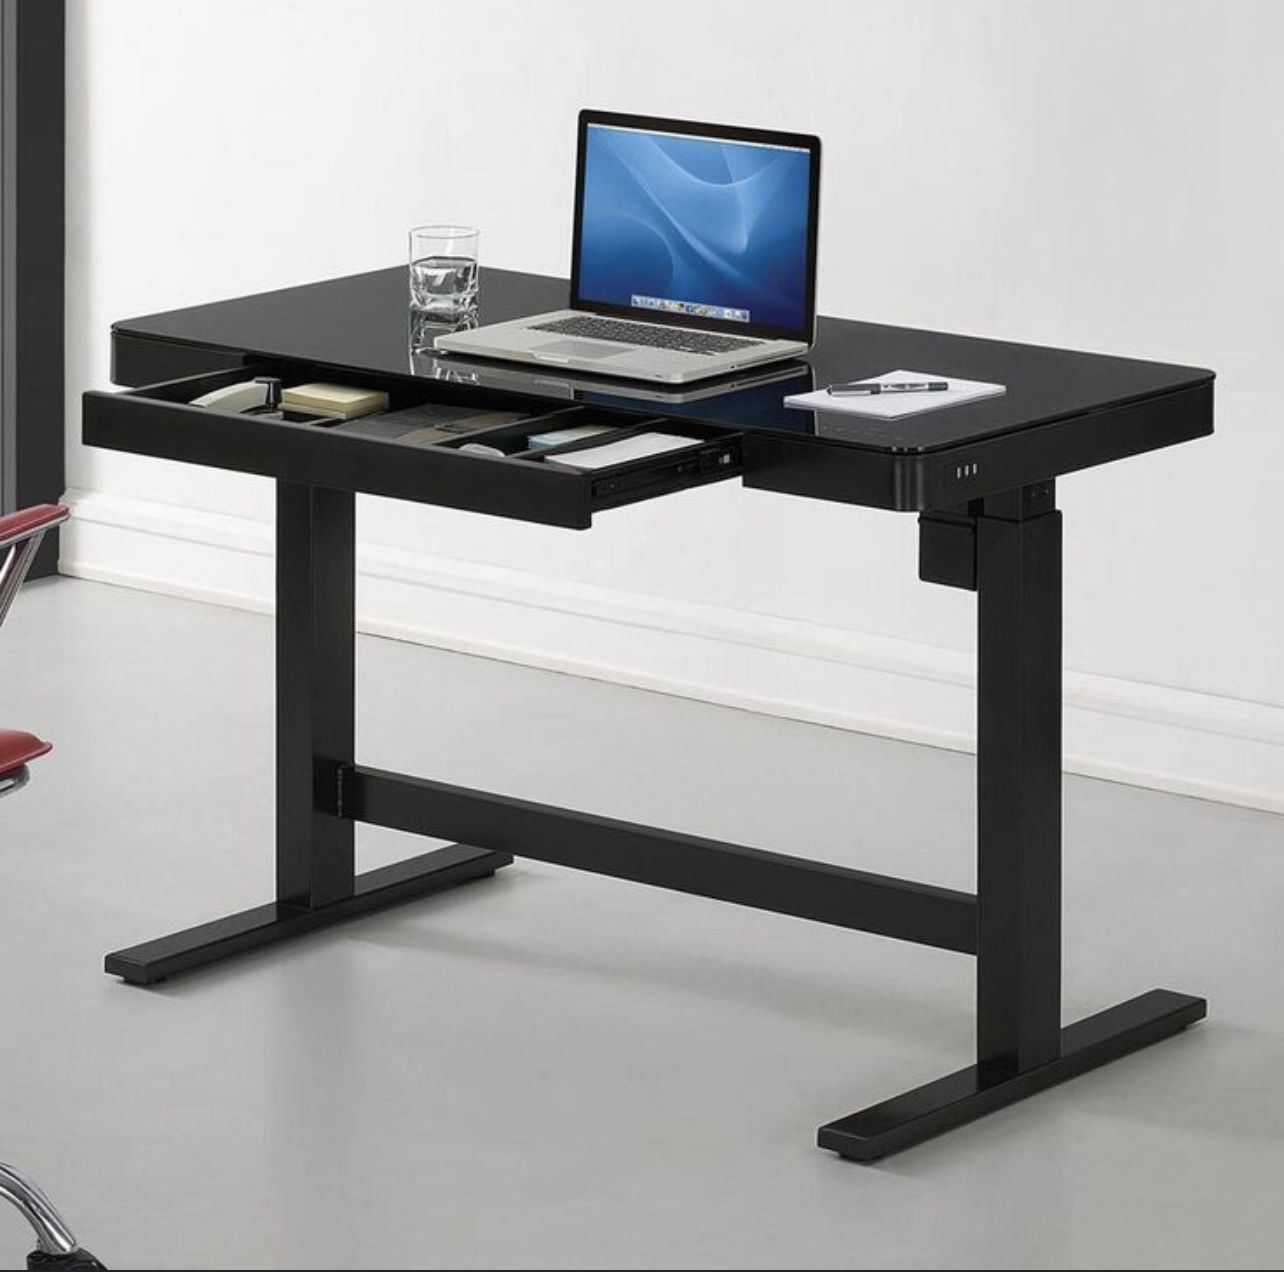 Adjustable Height Glass Desk 